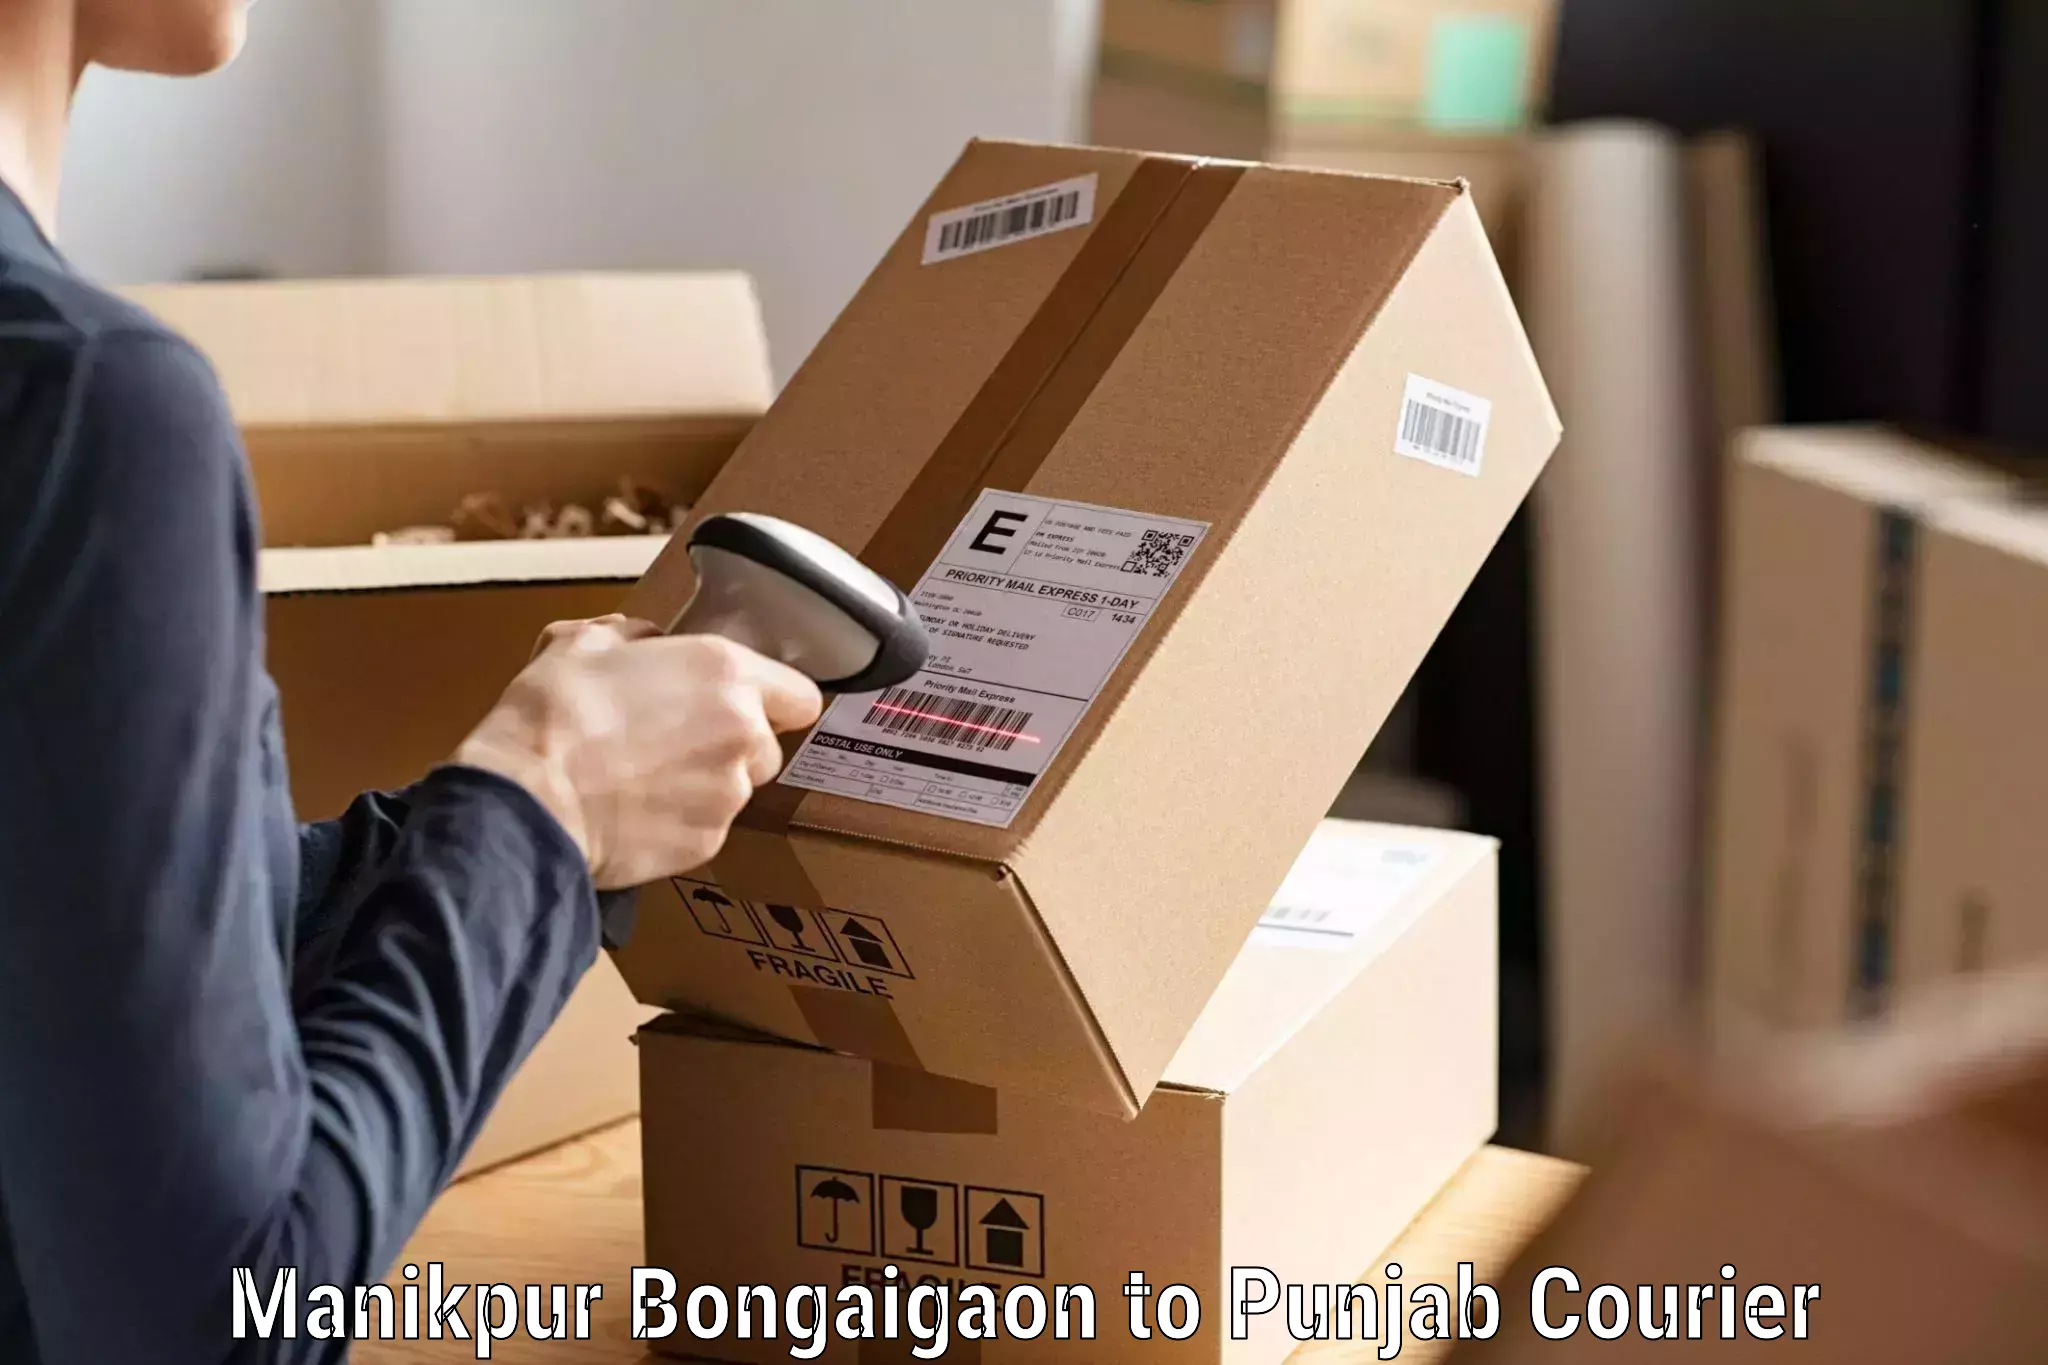 Urgent courier needs Manikpur Bongaigaon to Mehta Chowk